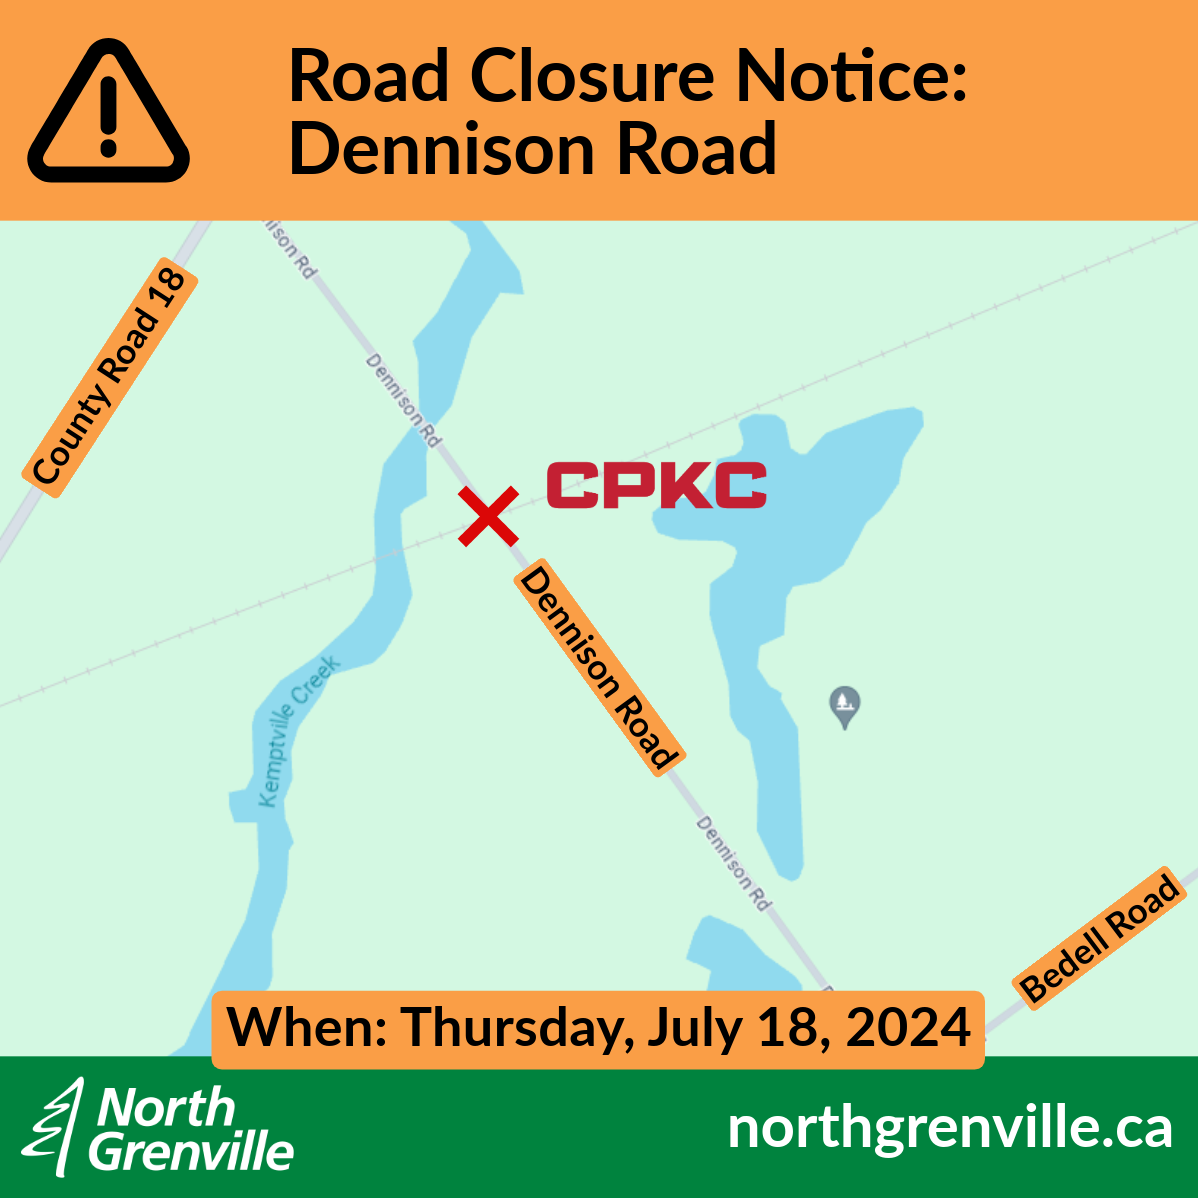 Road Closure Notice: July 18 Dennison Road